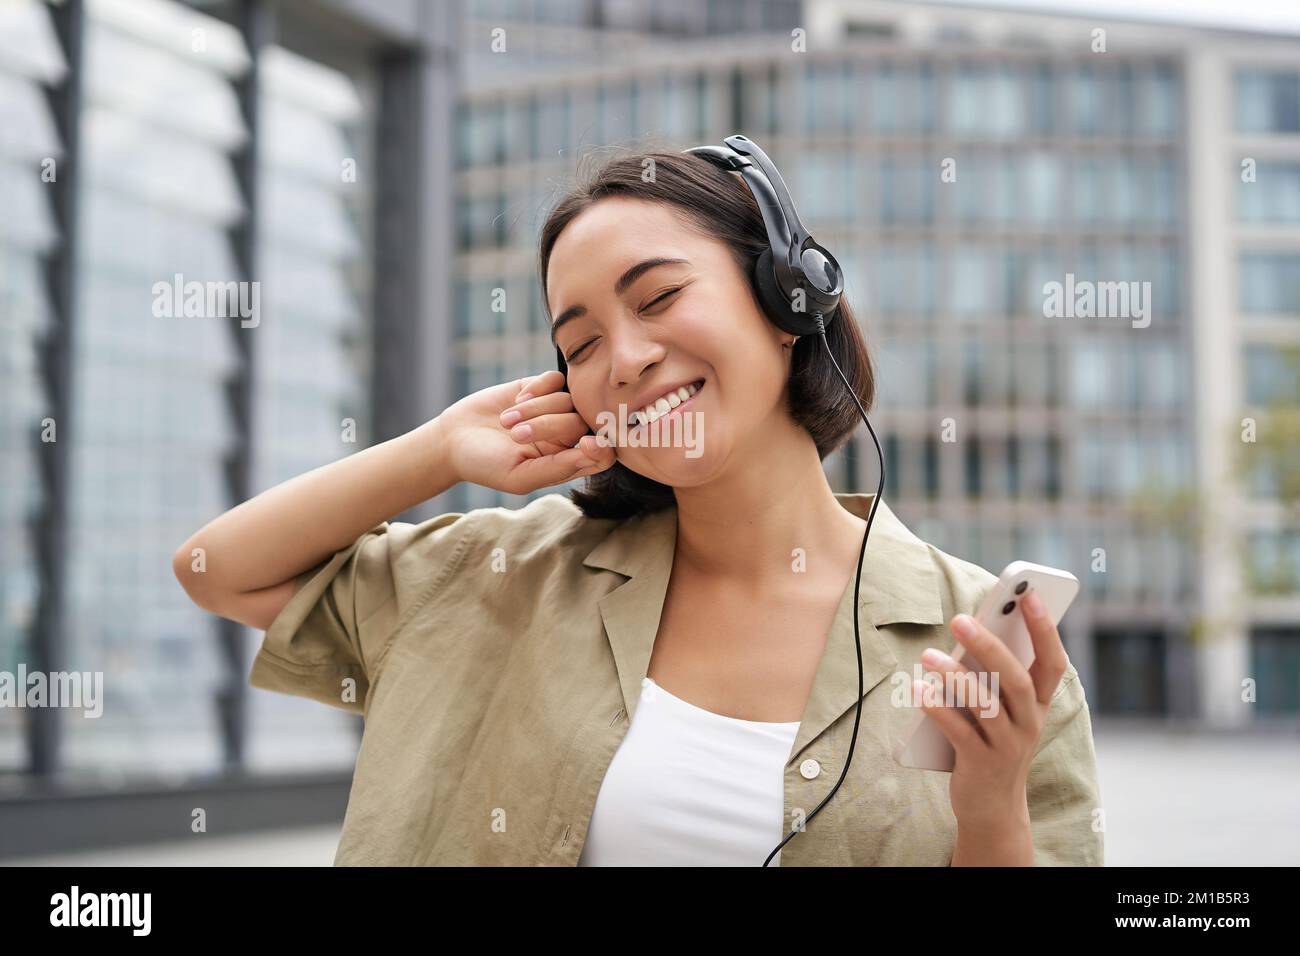 Enjoying the Beat. a Smiling Ethnic Woman Enjoying Her Headphones and  Dancing in Her Pajamas. Stock Photo - Image of ethnic, dance: 276743710